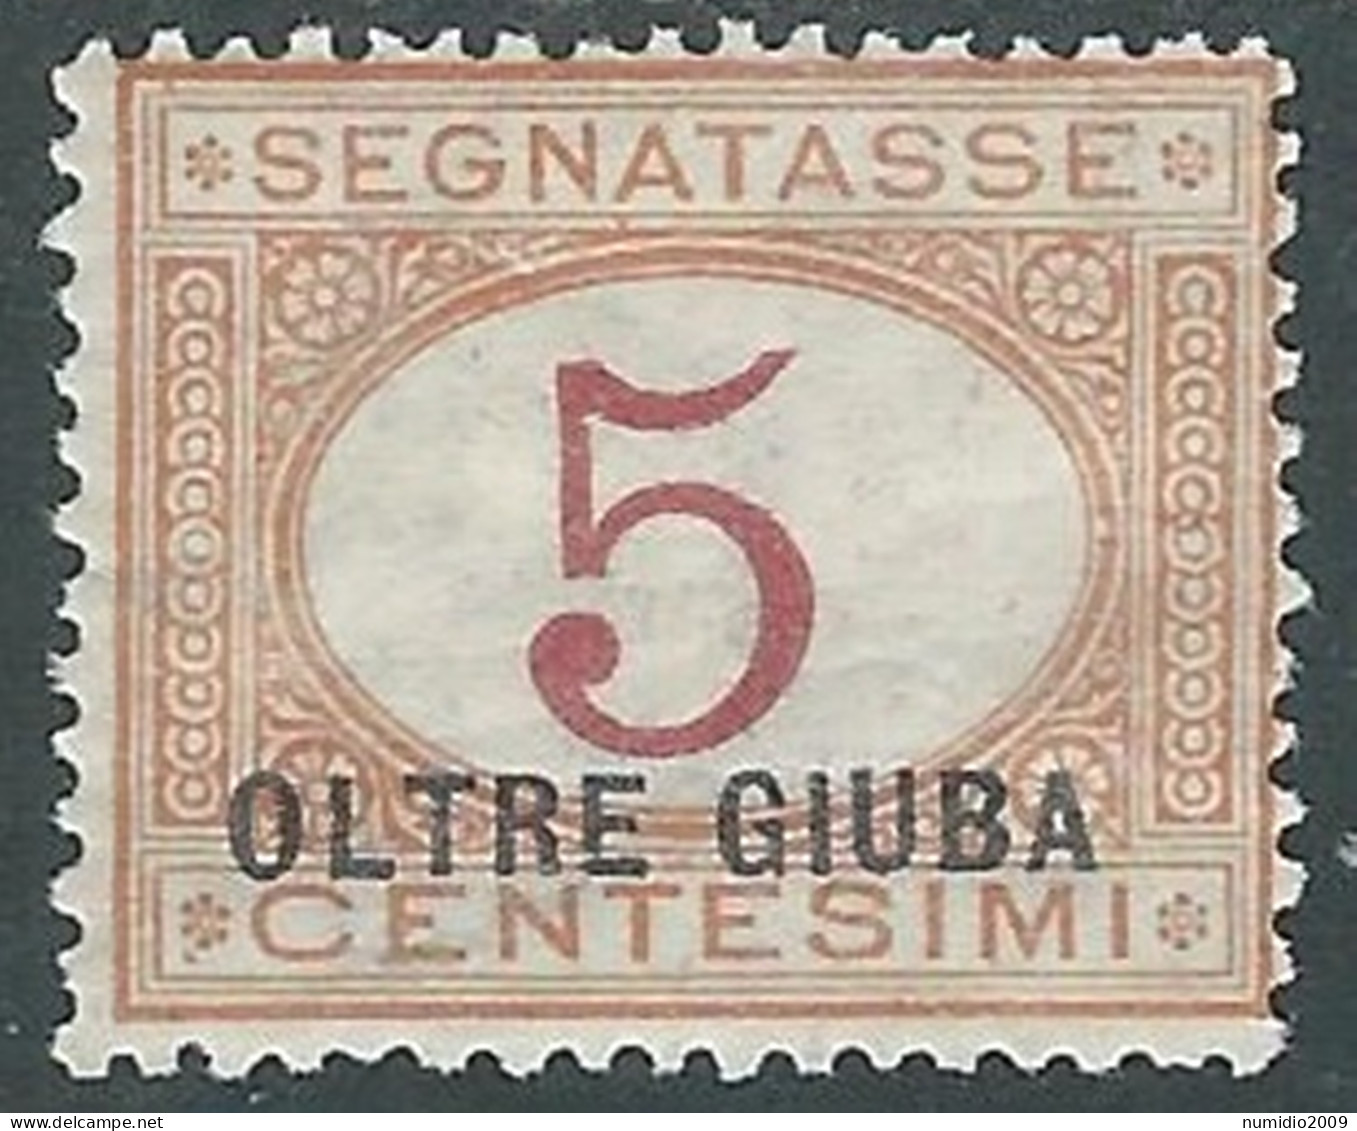 1925 OLTRE GIUBA SEGNATASSE 5 CENT MH * - I55-4 - Oltre Giuba